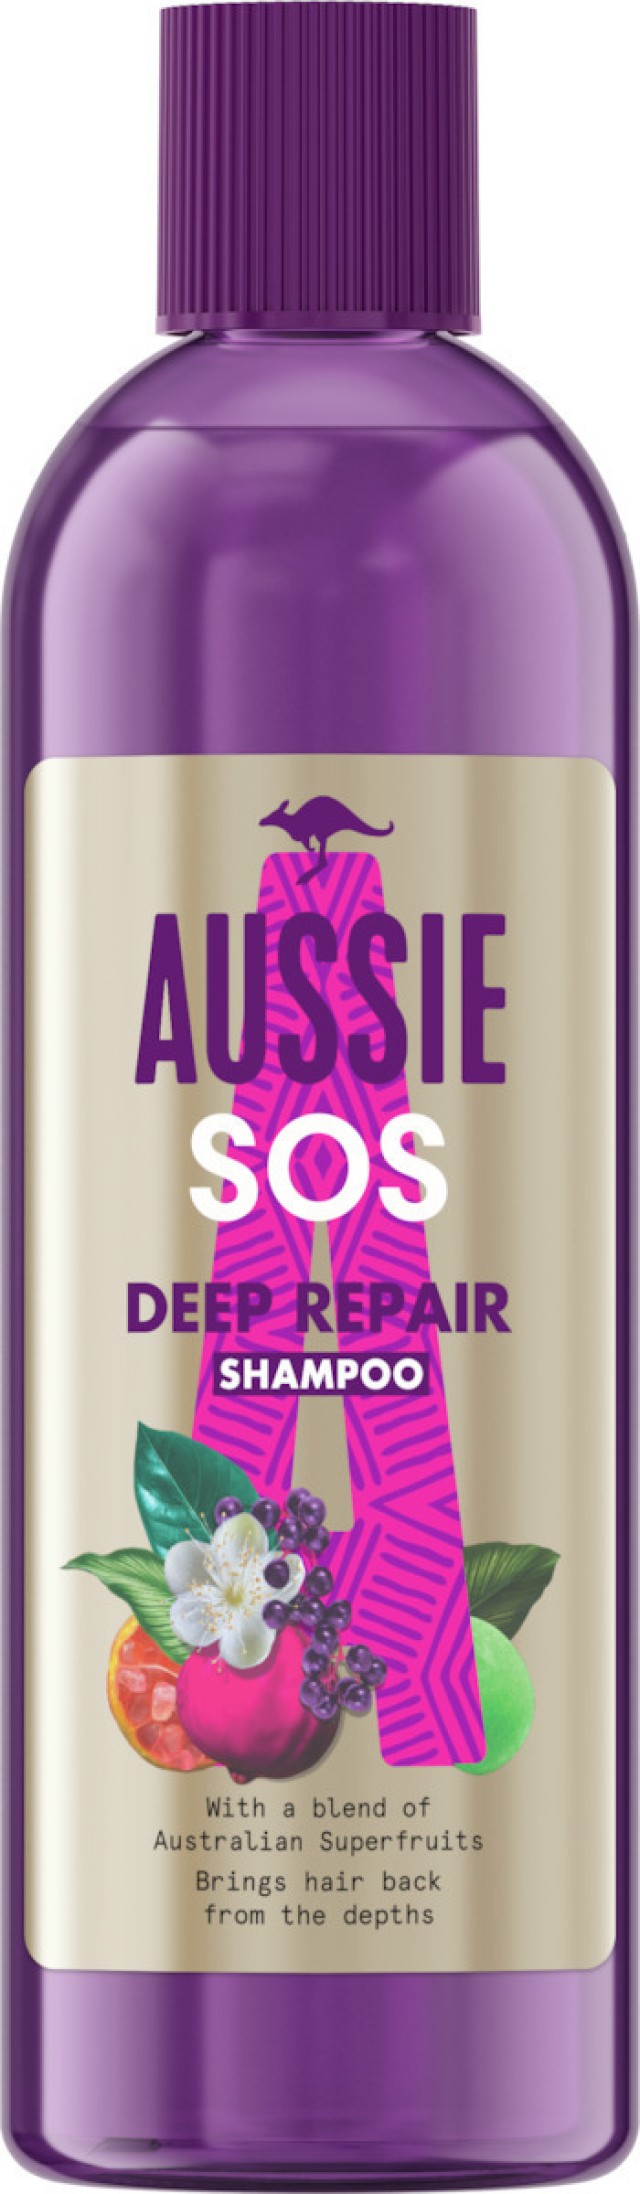 Aussie SOS Deep Repair Shampoo Σαμπουάν για Βαθιά Αναδόμηση των Μαλλιών 290ml